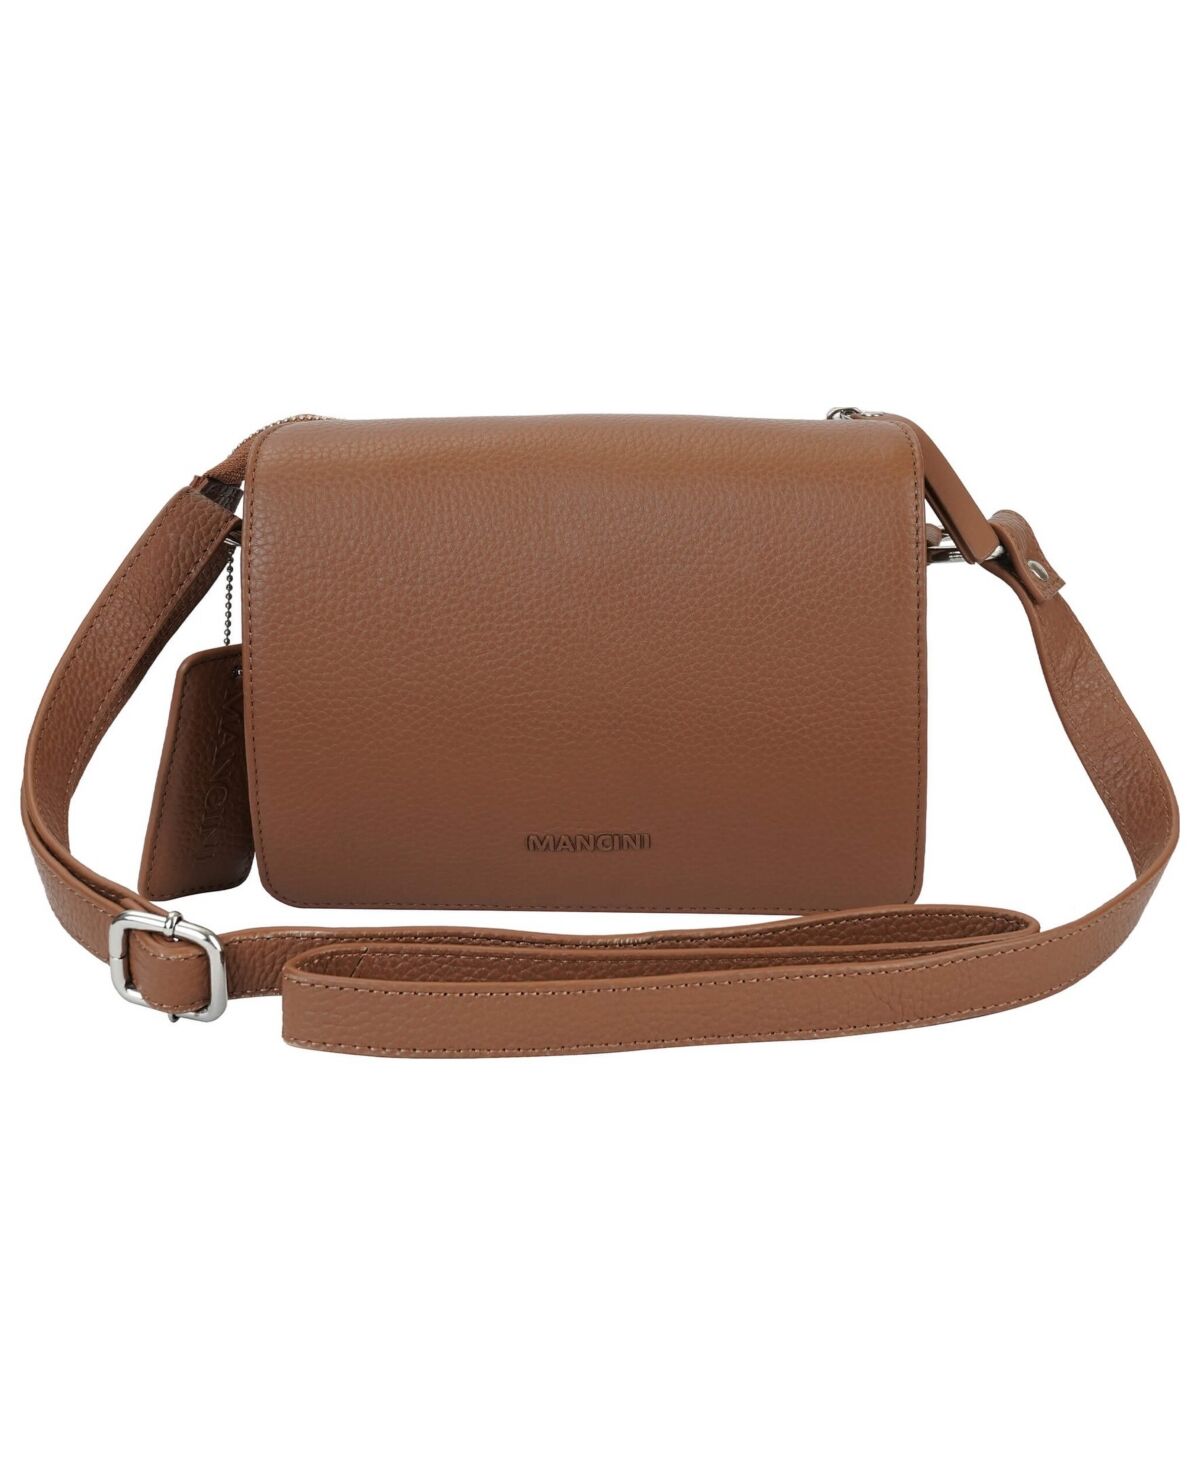 Mancini Pebble Leather Connie Crossbody Handbag - Camel